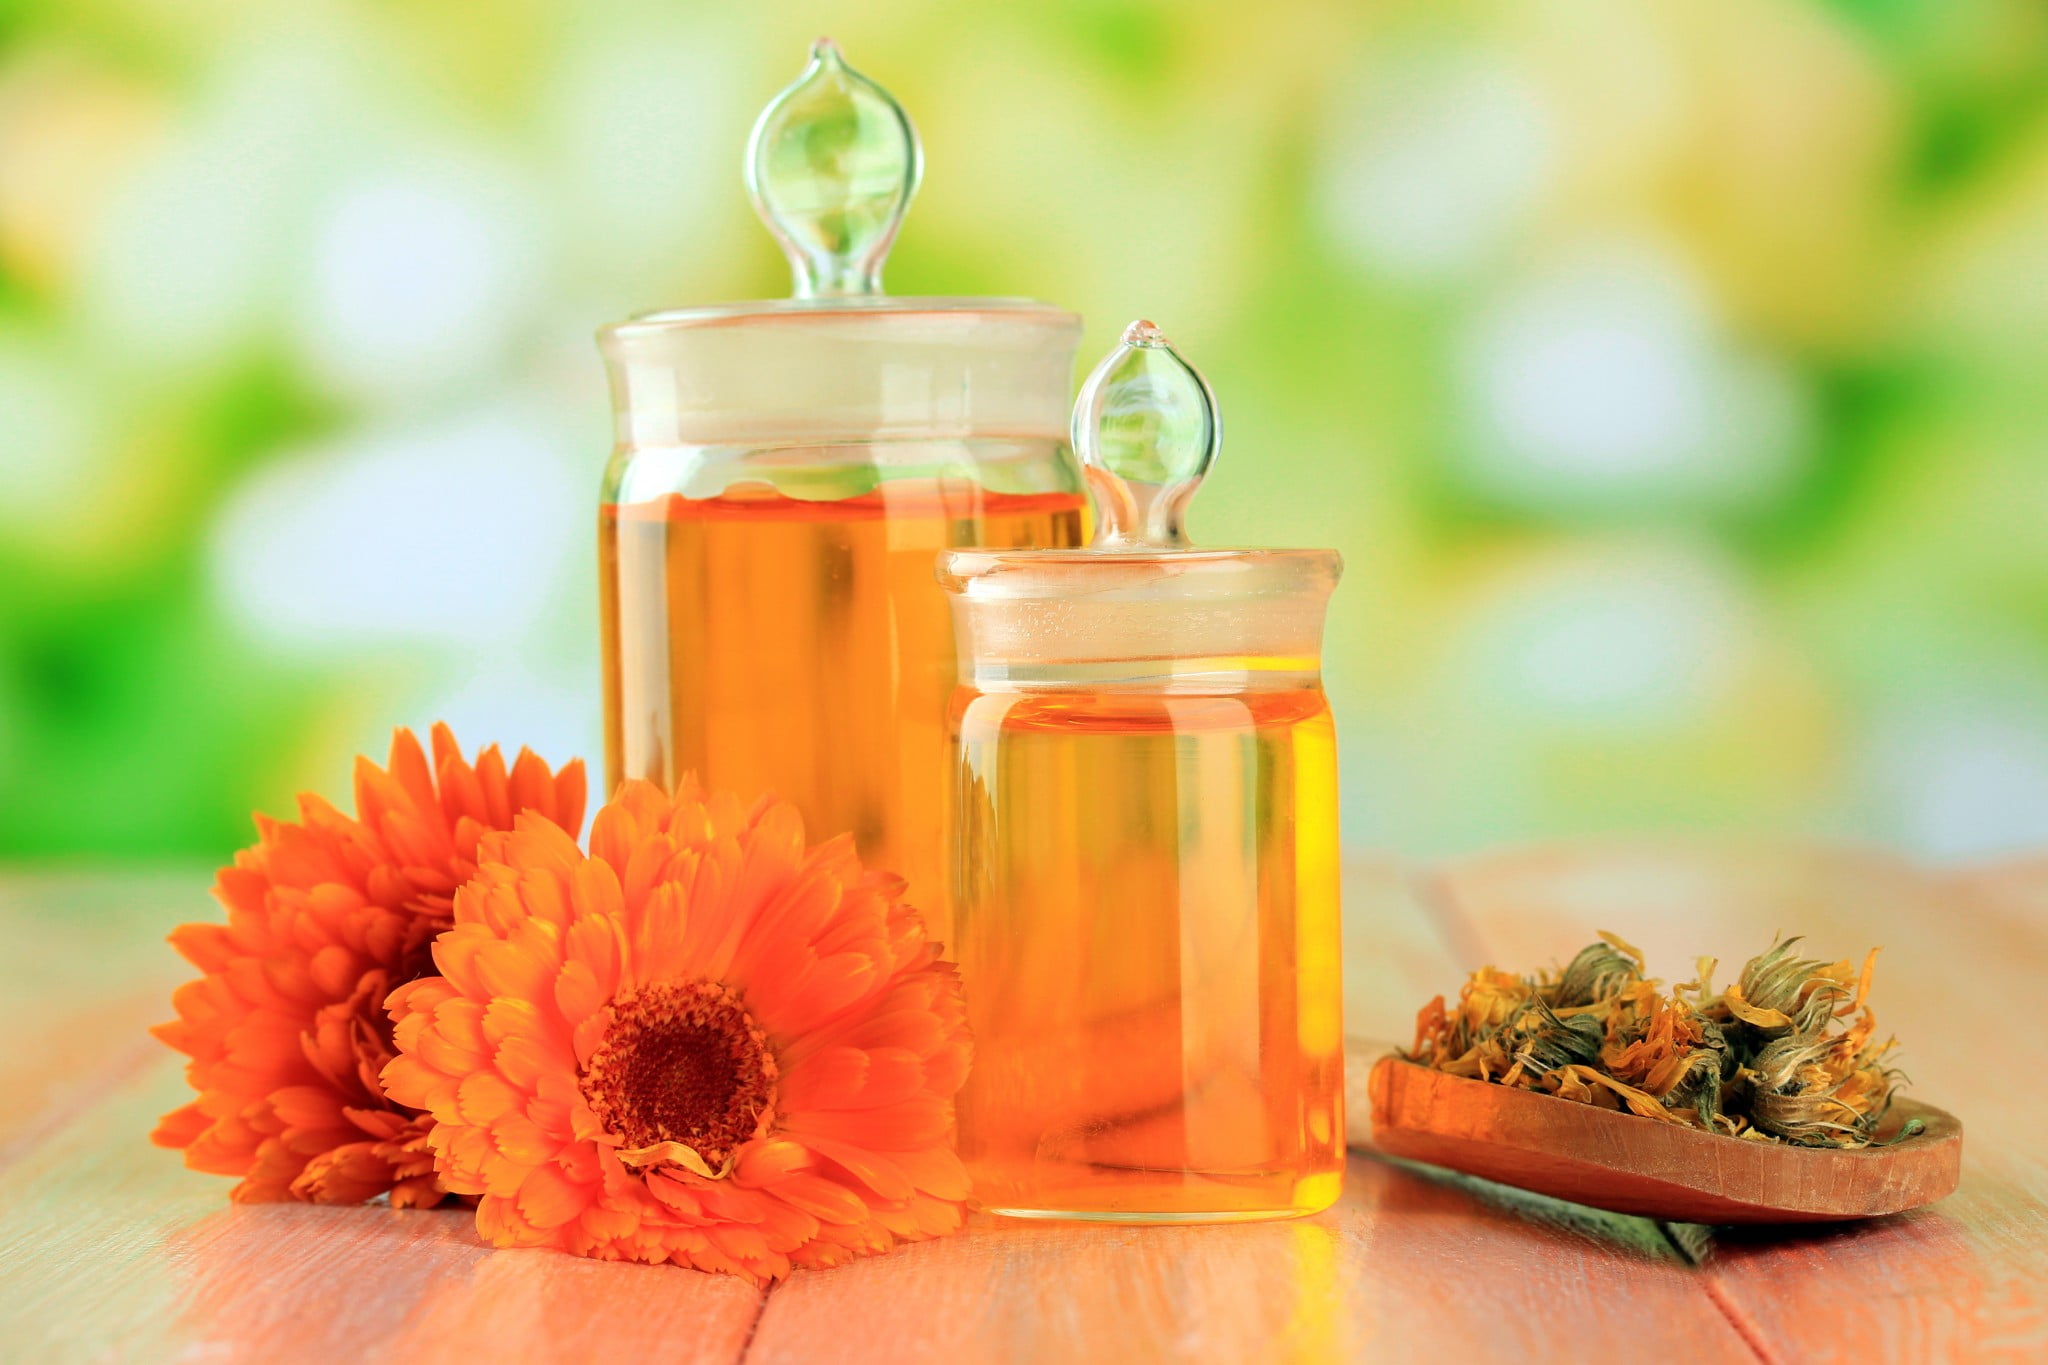 homoepathy: jars full of tincture and some orange flowers